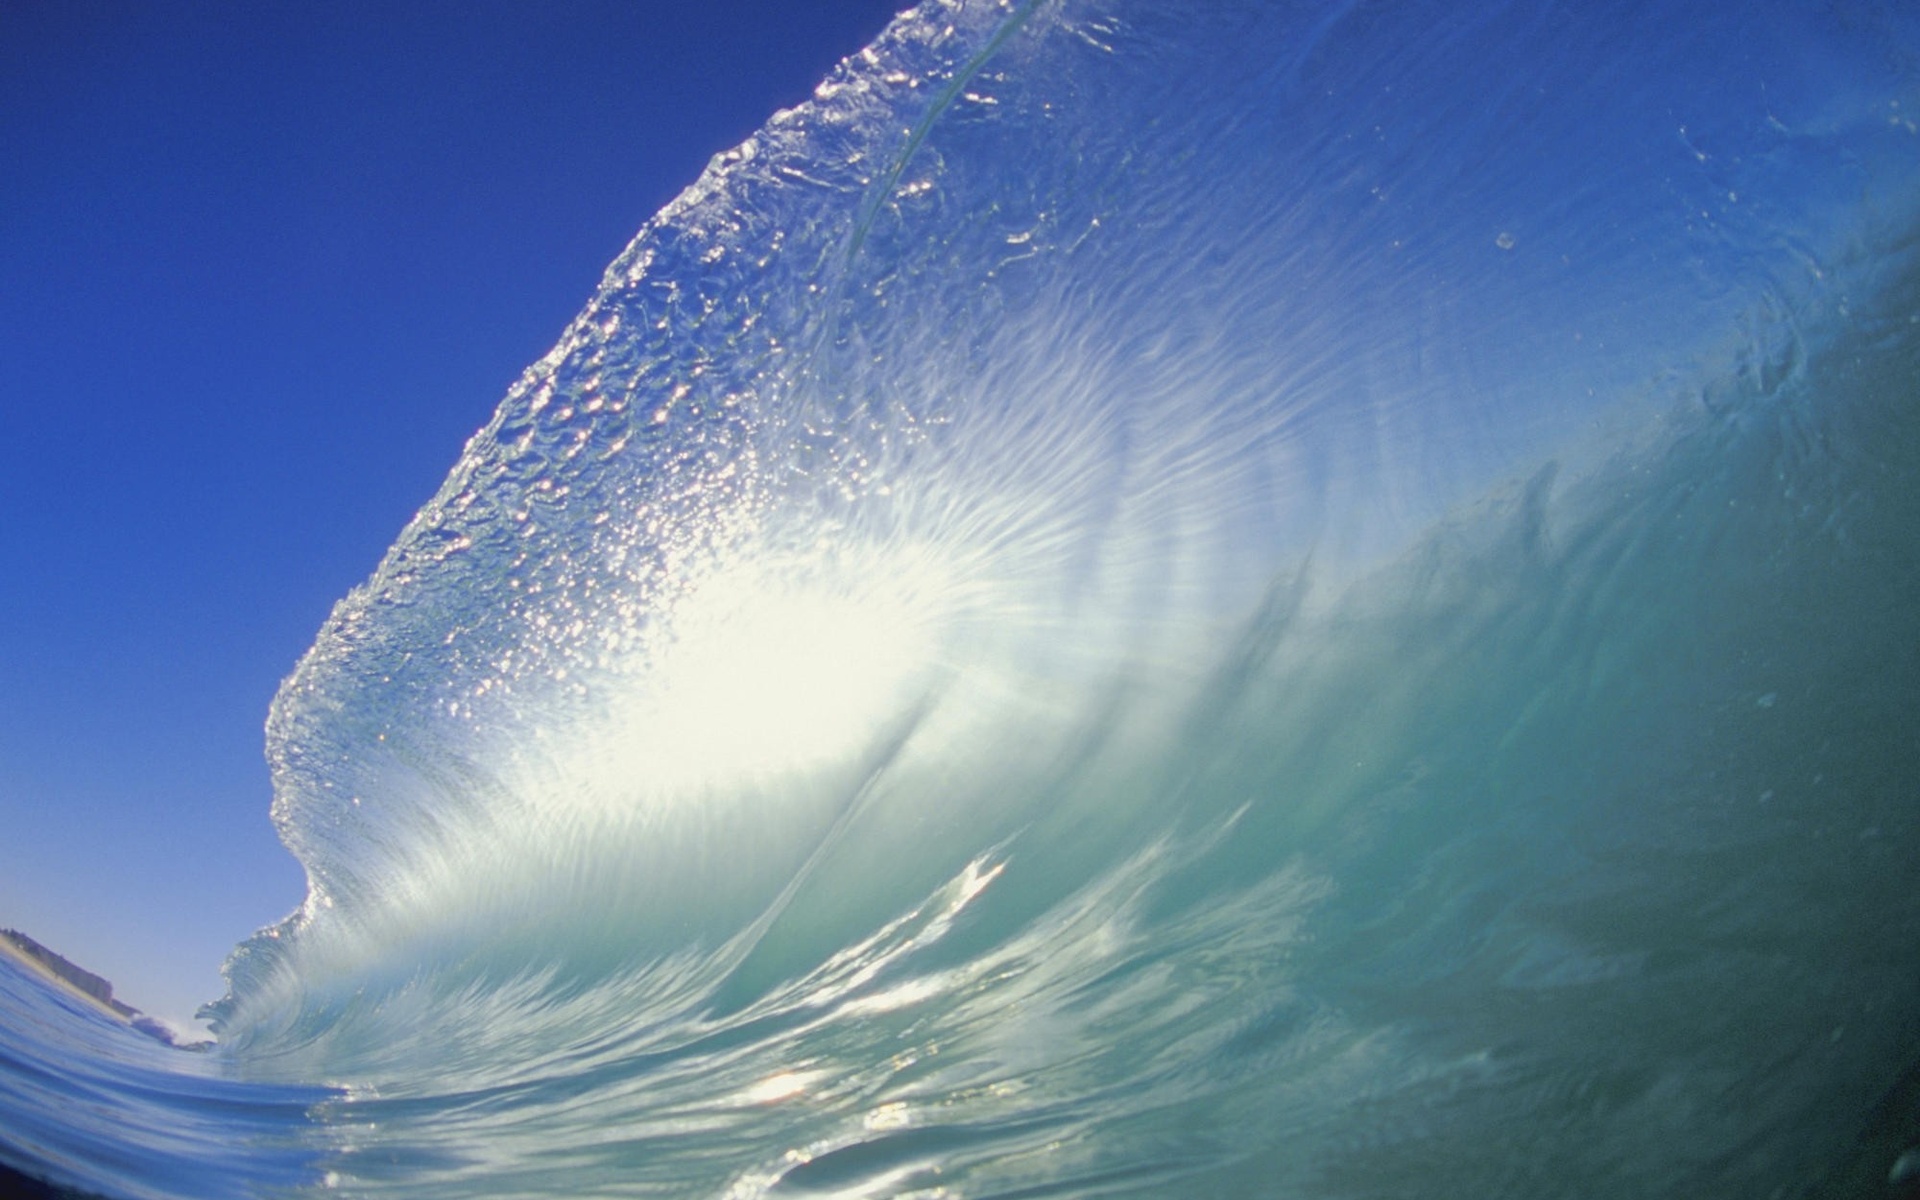 imágenes increíbles para fondo de pantalla,ola,cielo,onda de viento,azul,agua